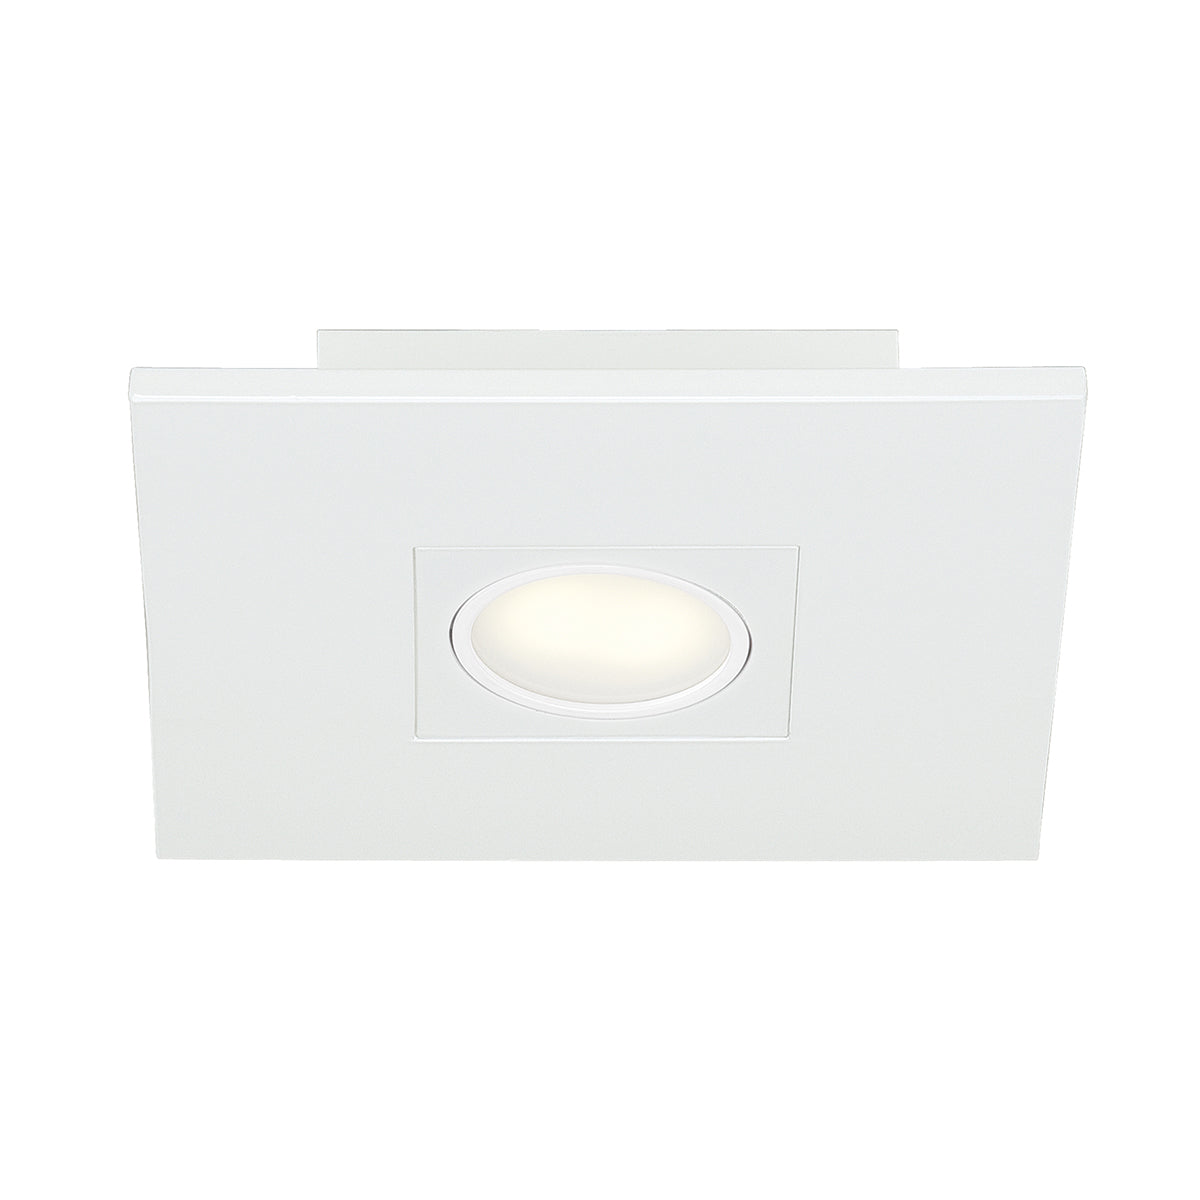 VENUE Flush mount - 27991-015 INTEGRATED LED | EUROFASE